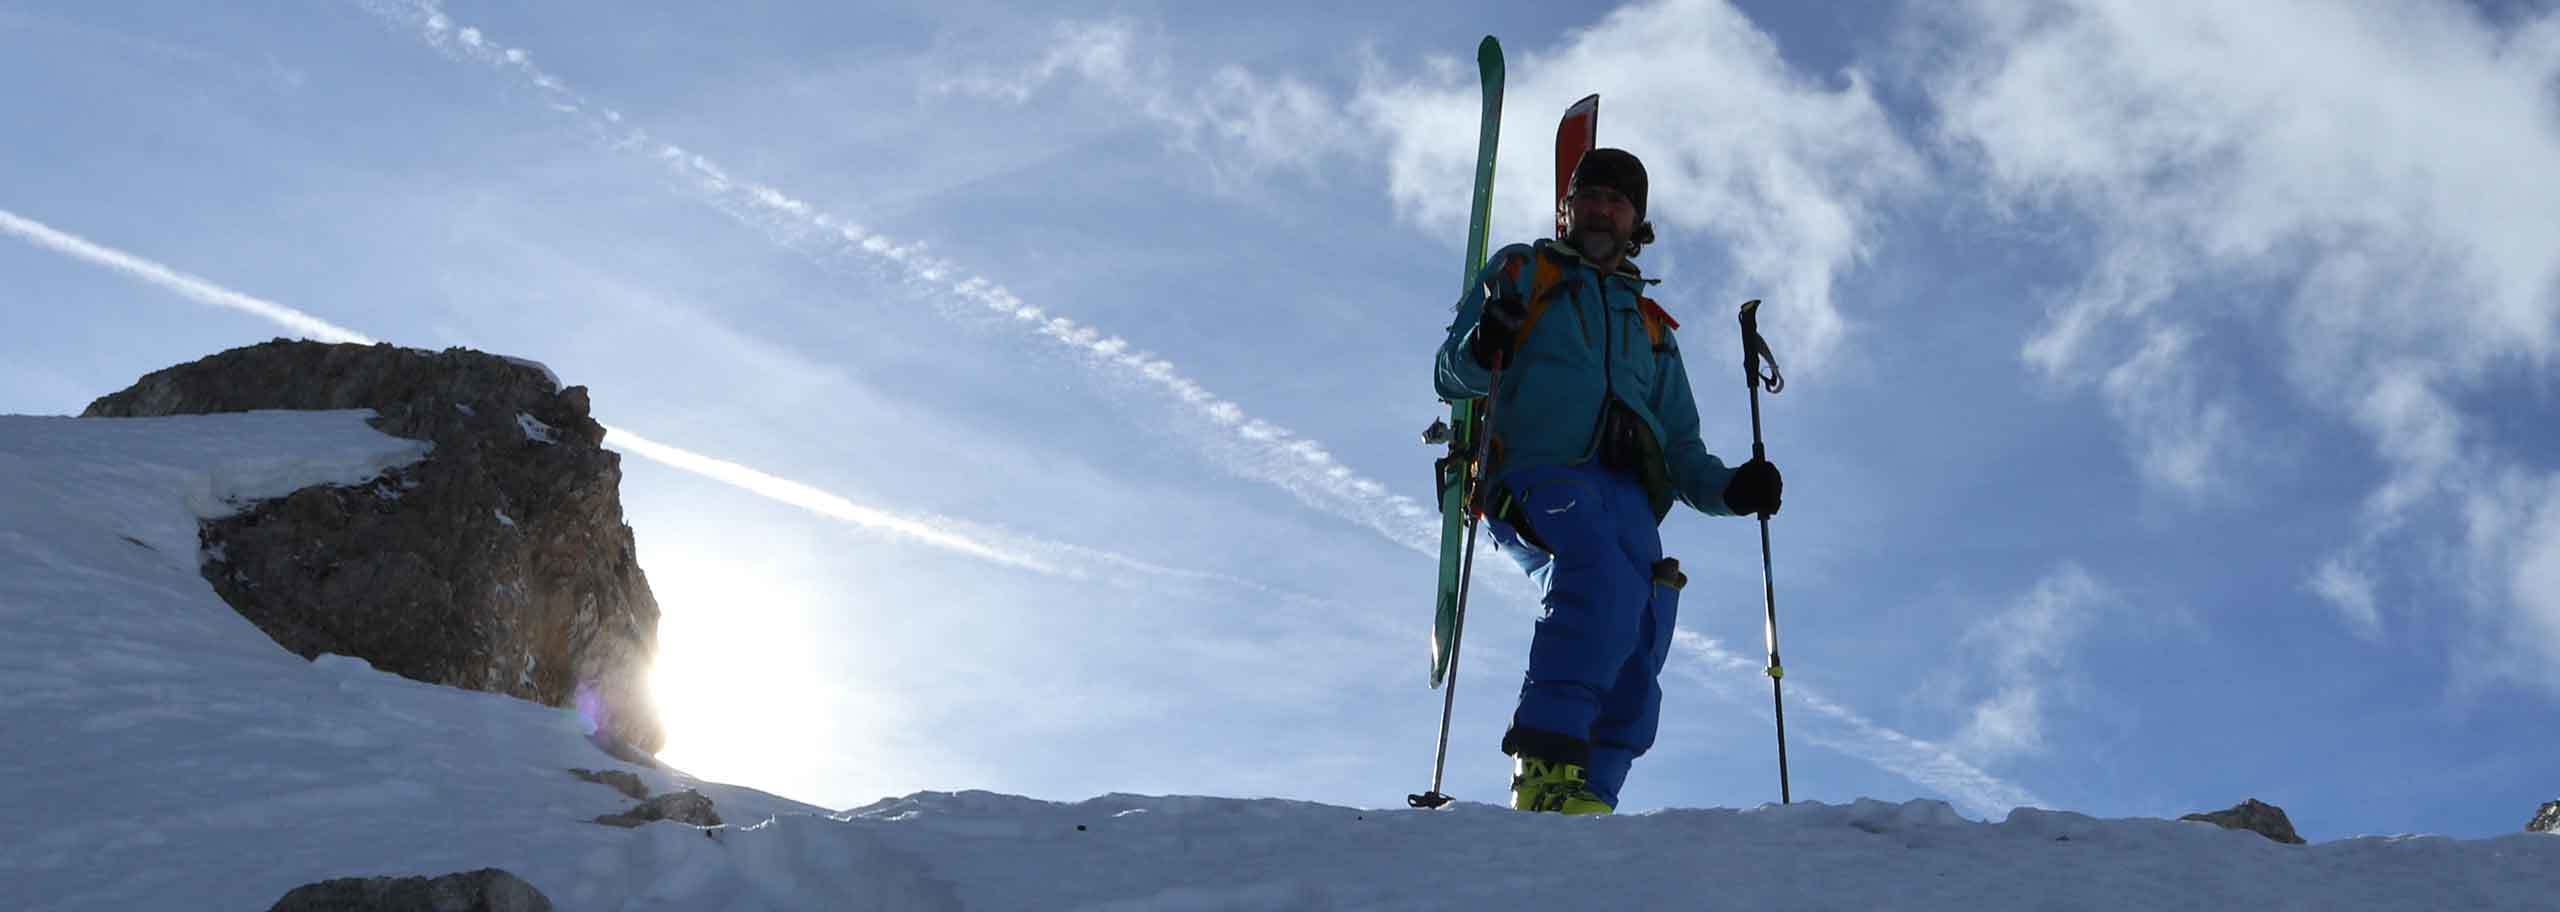 Ski Mountaineering in Bardonecchia with Mountain Guide